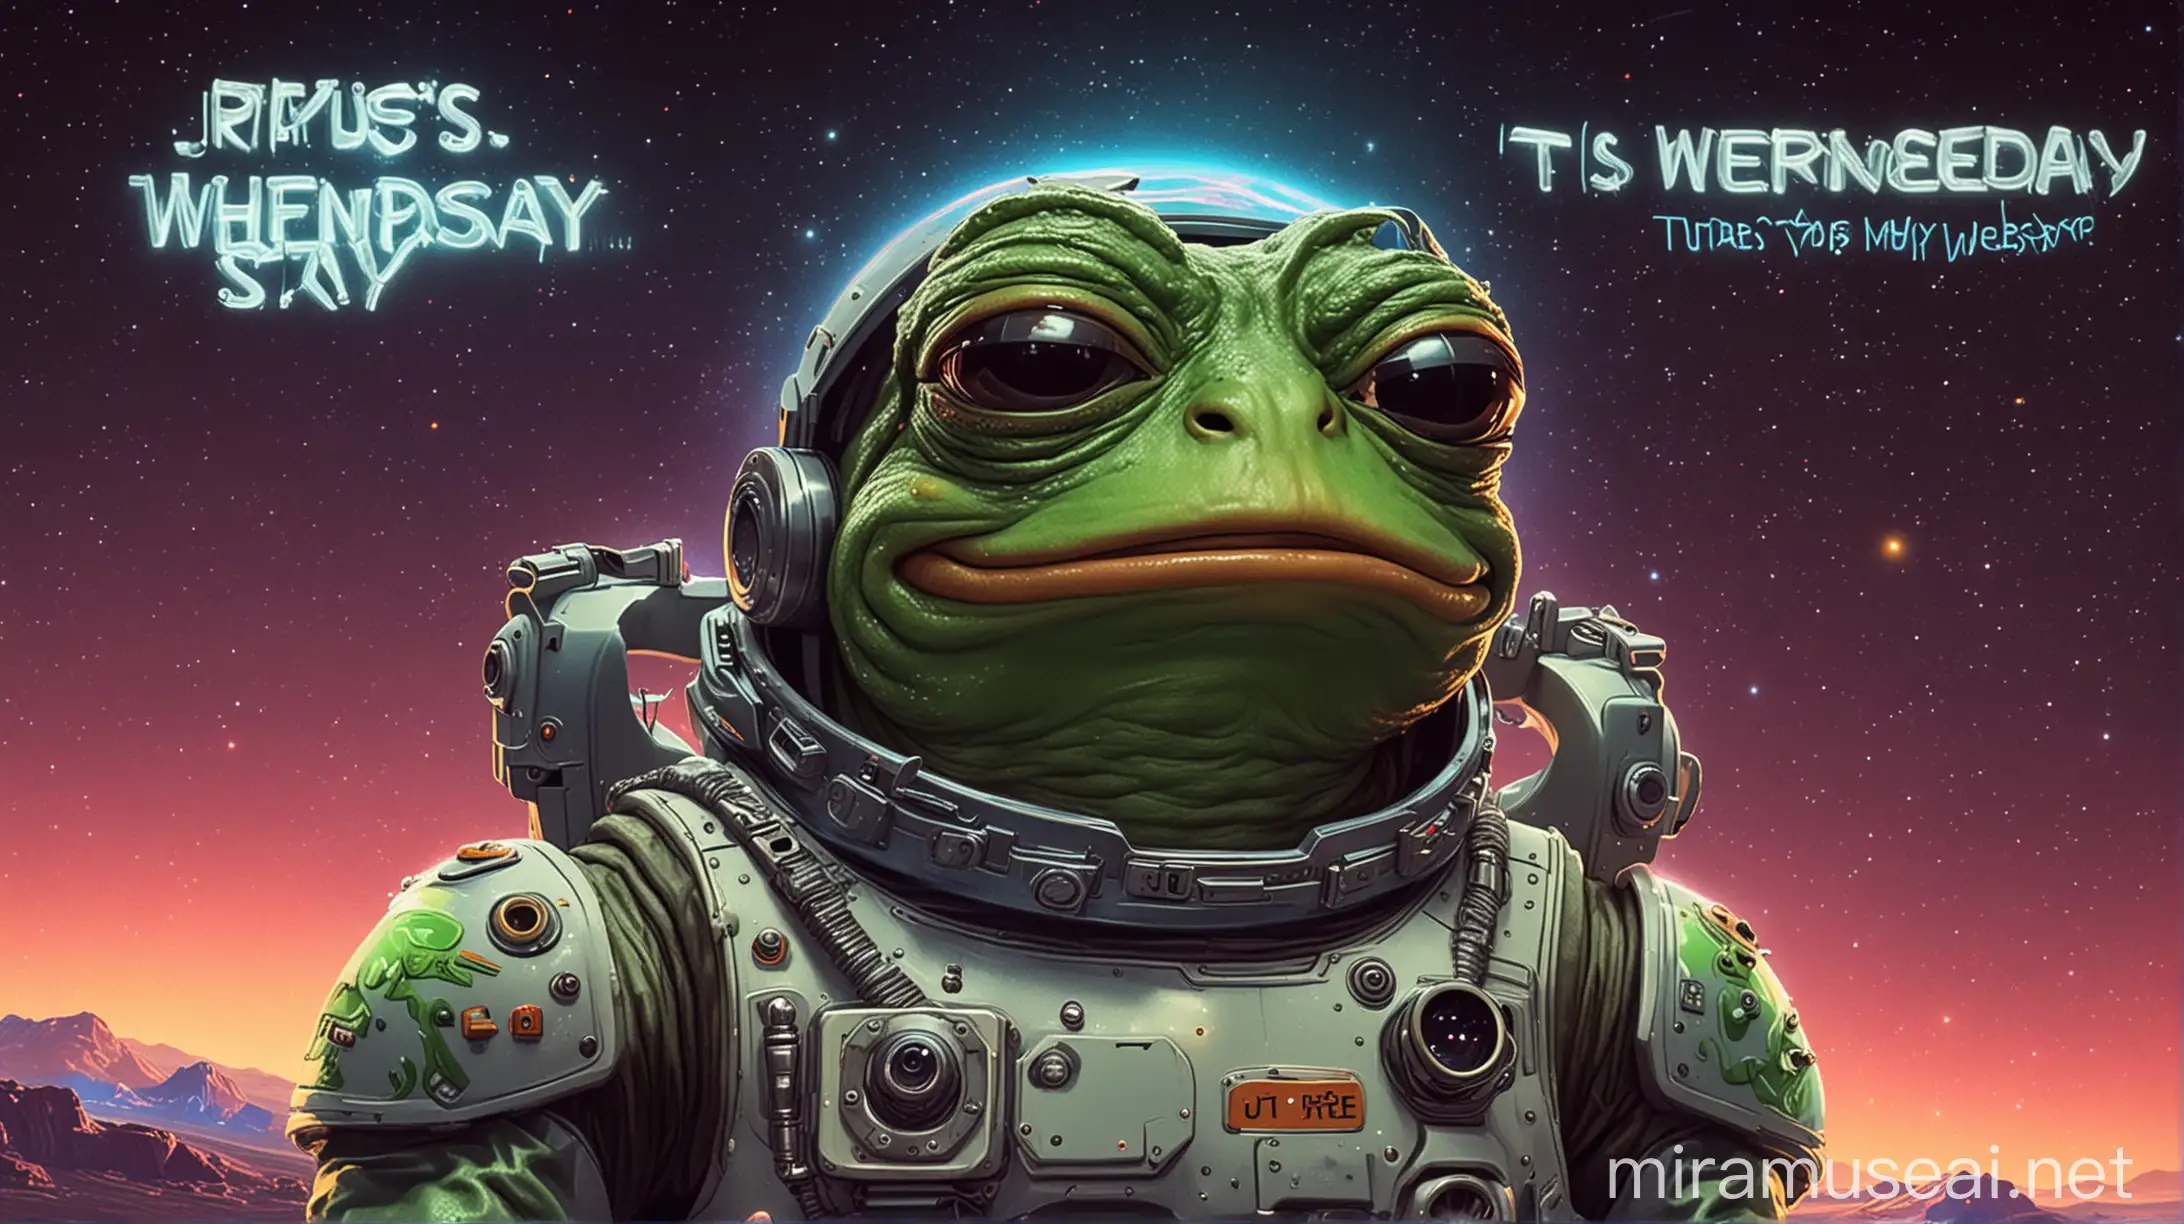 Pepe Frog in Neon Spacesuit under Wednesday Night Sky